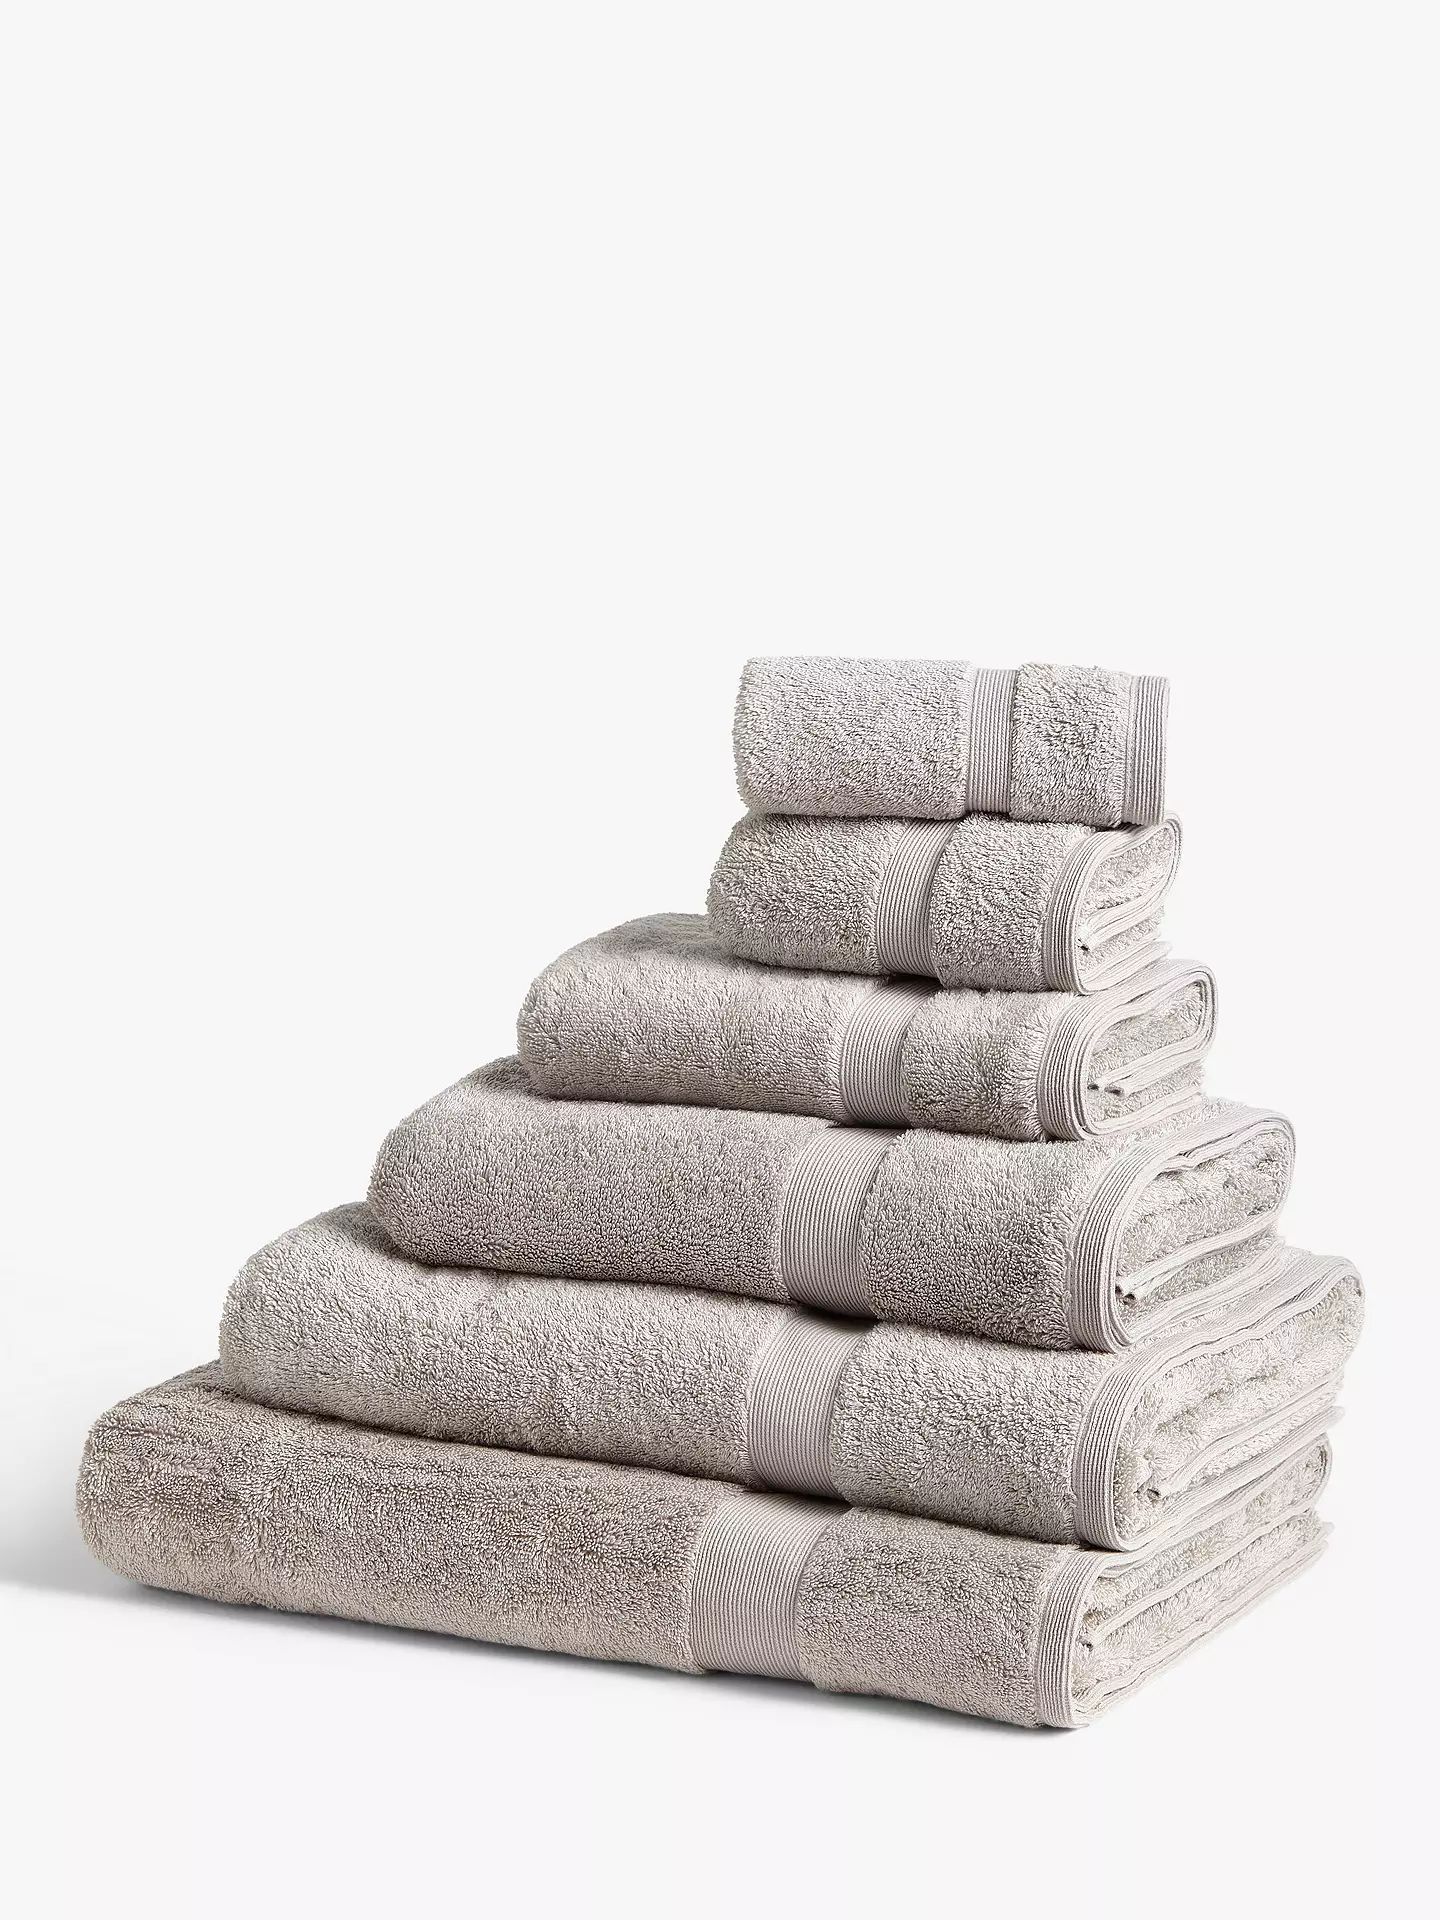 John Lewis & Partners Egyptian Cotton Towels, Stormy Grey | John Lewis UK